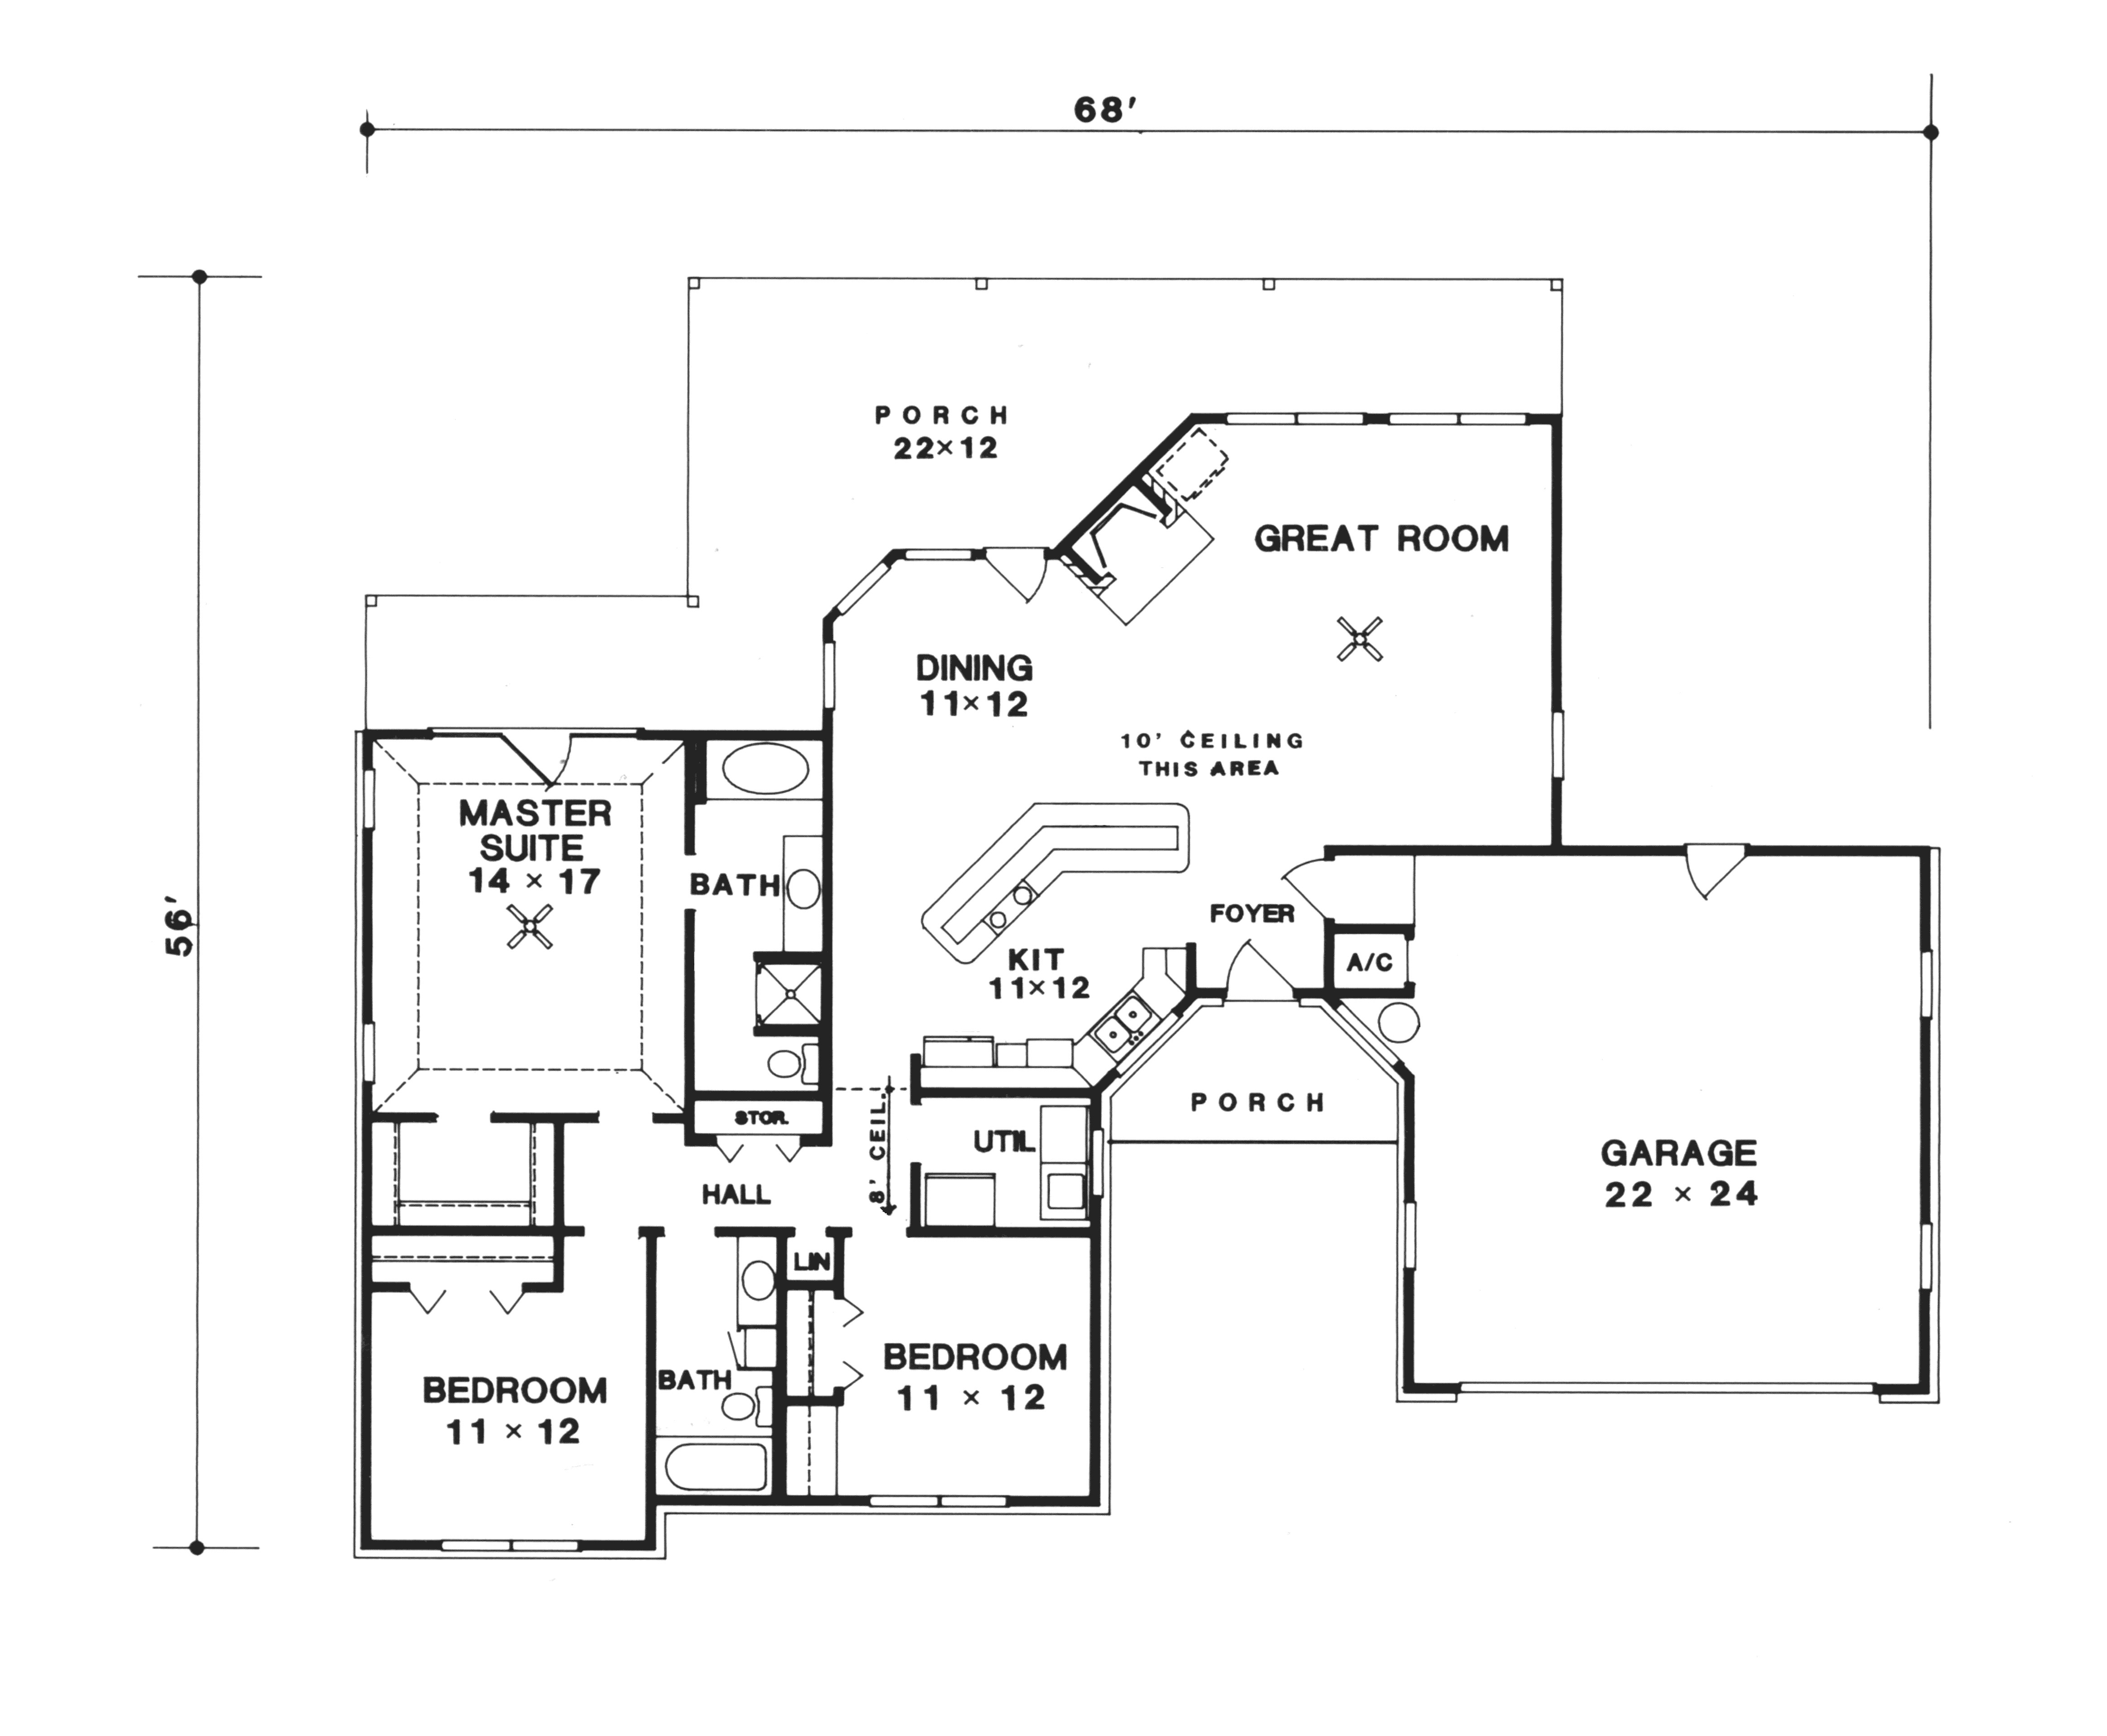 ba nursery custom homes floor plans custom home floor plans throughout custom house plans